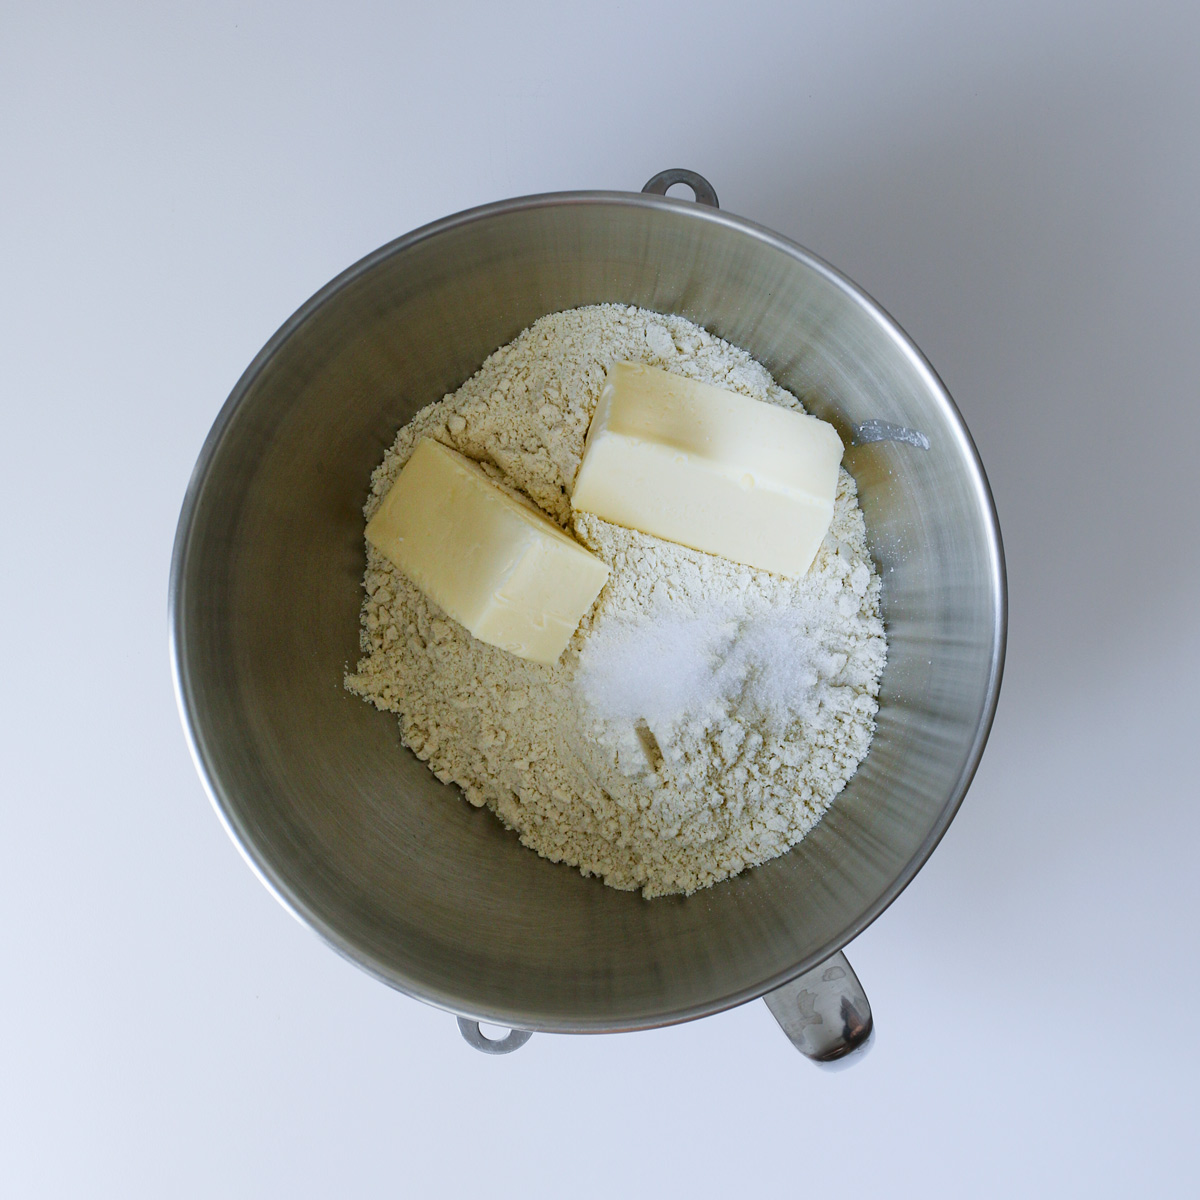 butter, masa, and salt in mixer bowl.